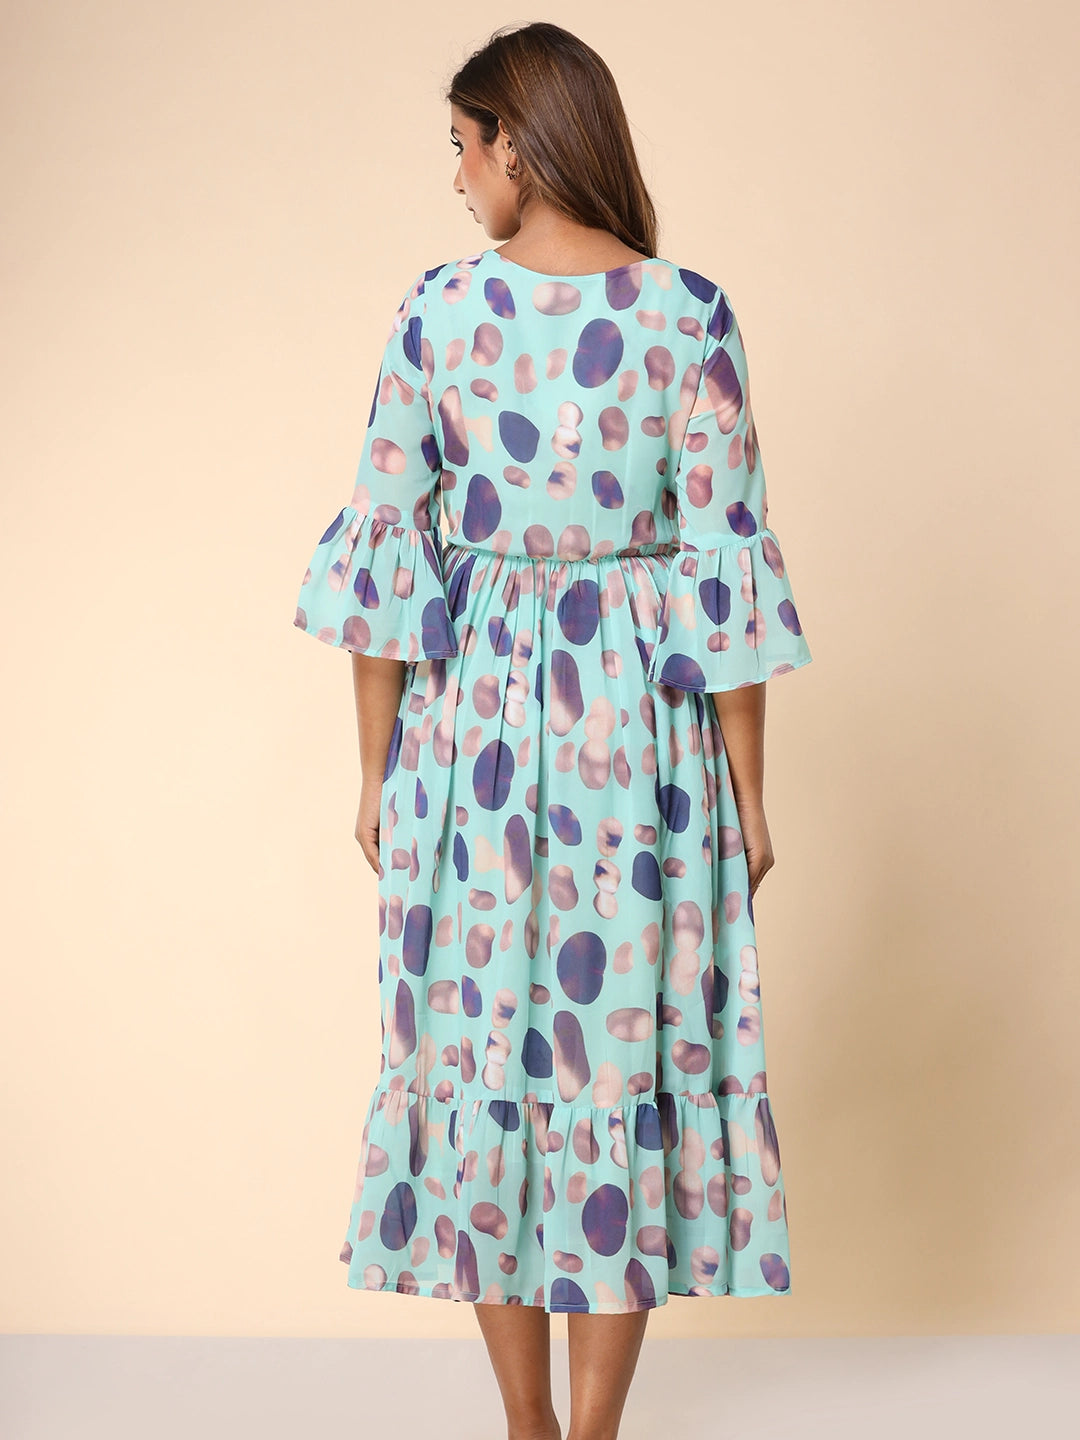 Stylish Printed Middie Dress